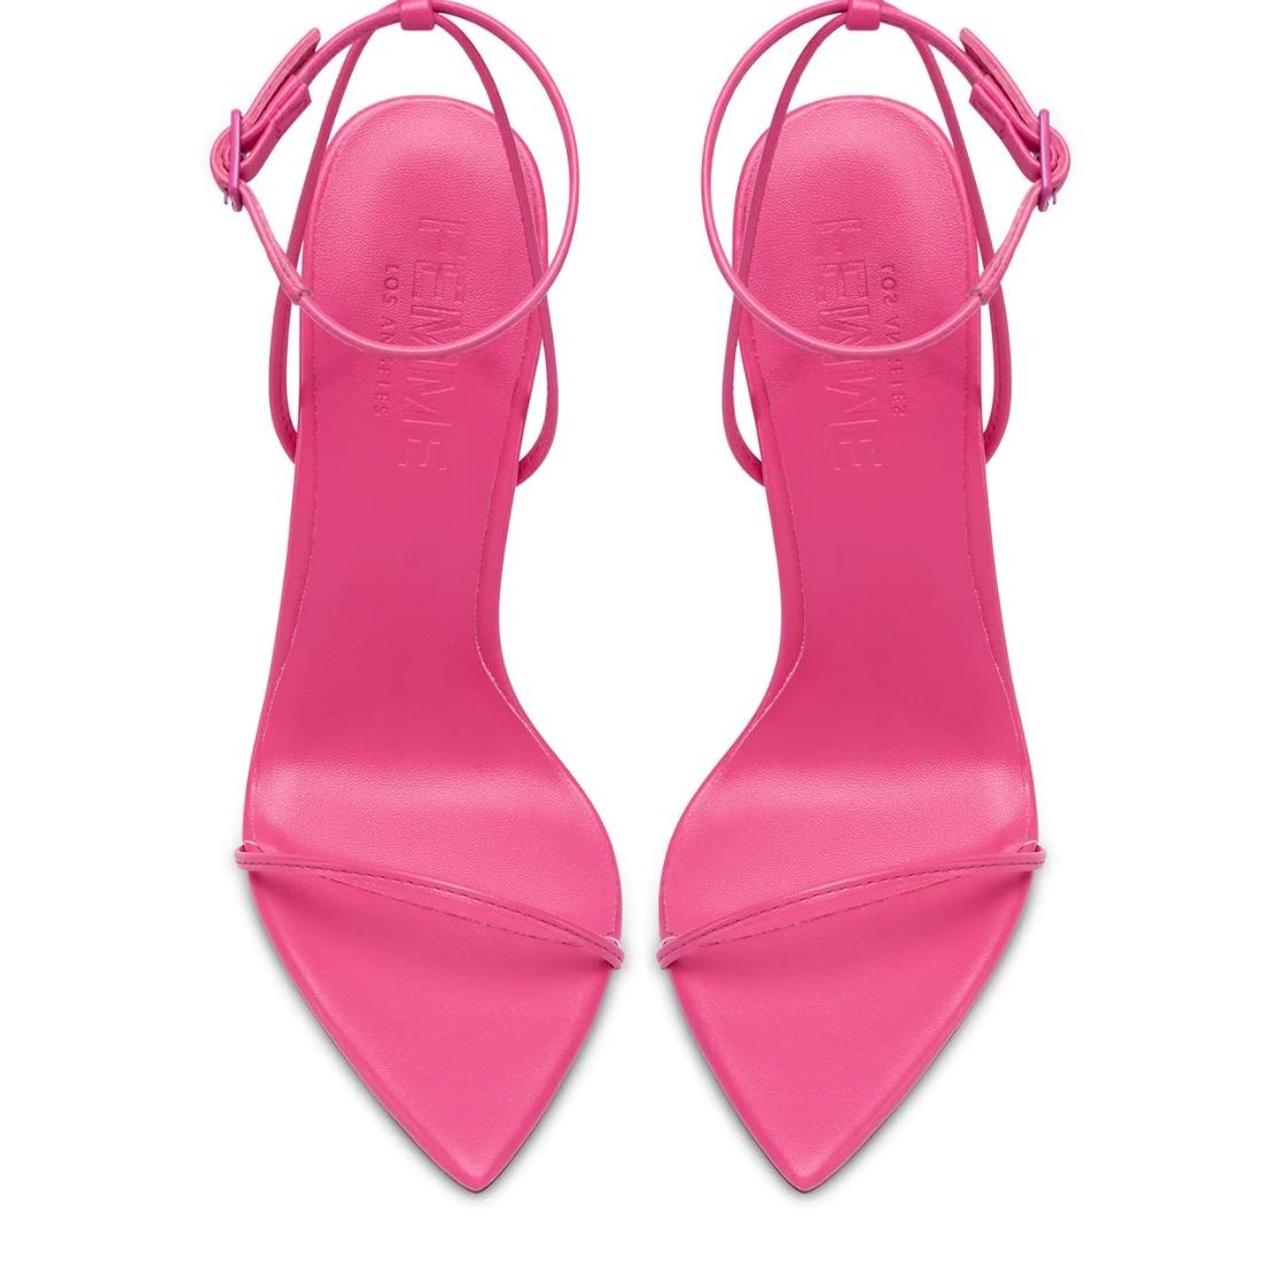 Femme Luxe Women's Pink Sandals (8)